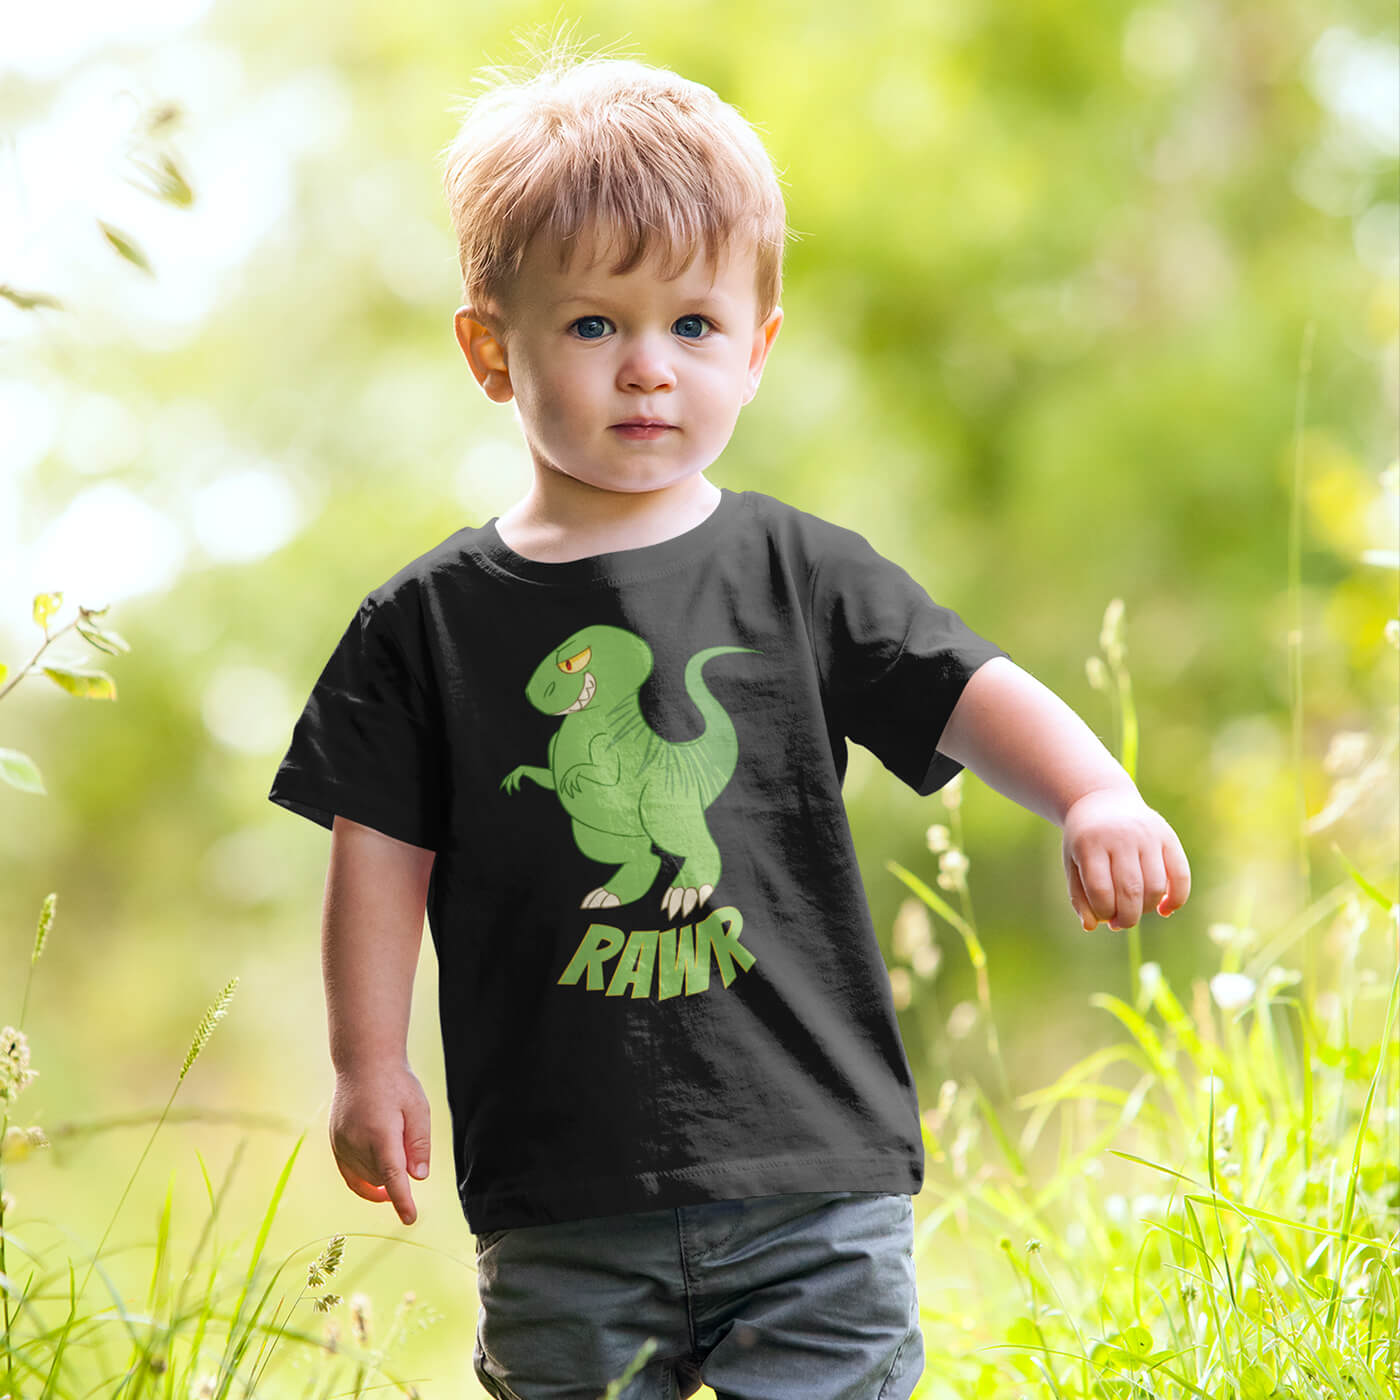 Kids t shirts Dinosaur with worldwide shipping on Vivamake.com